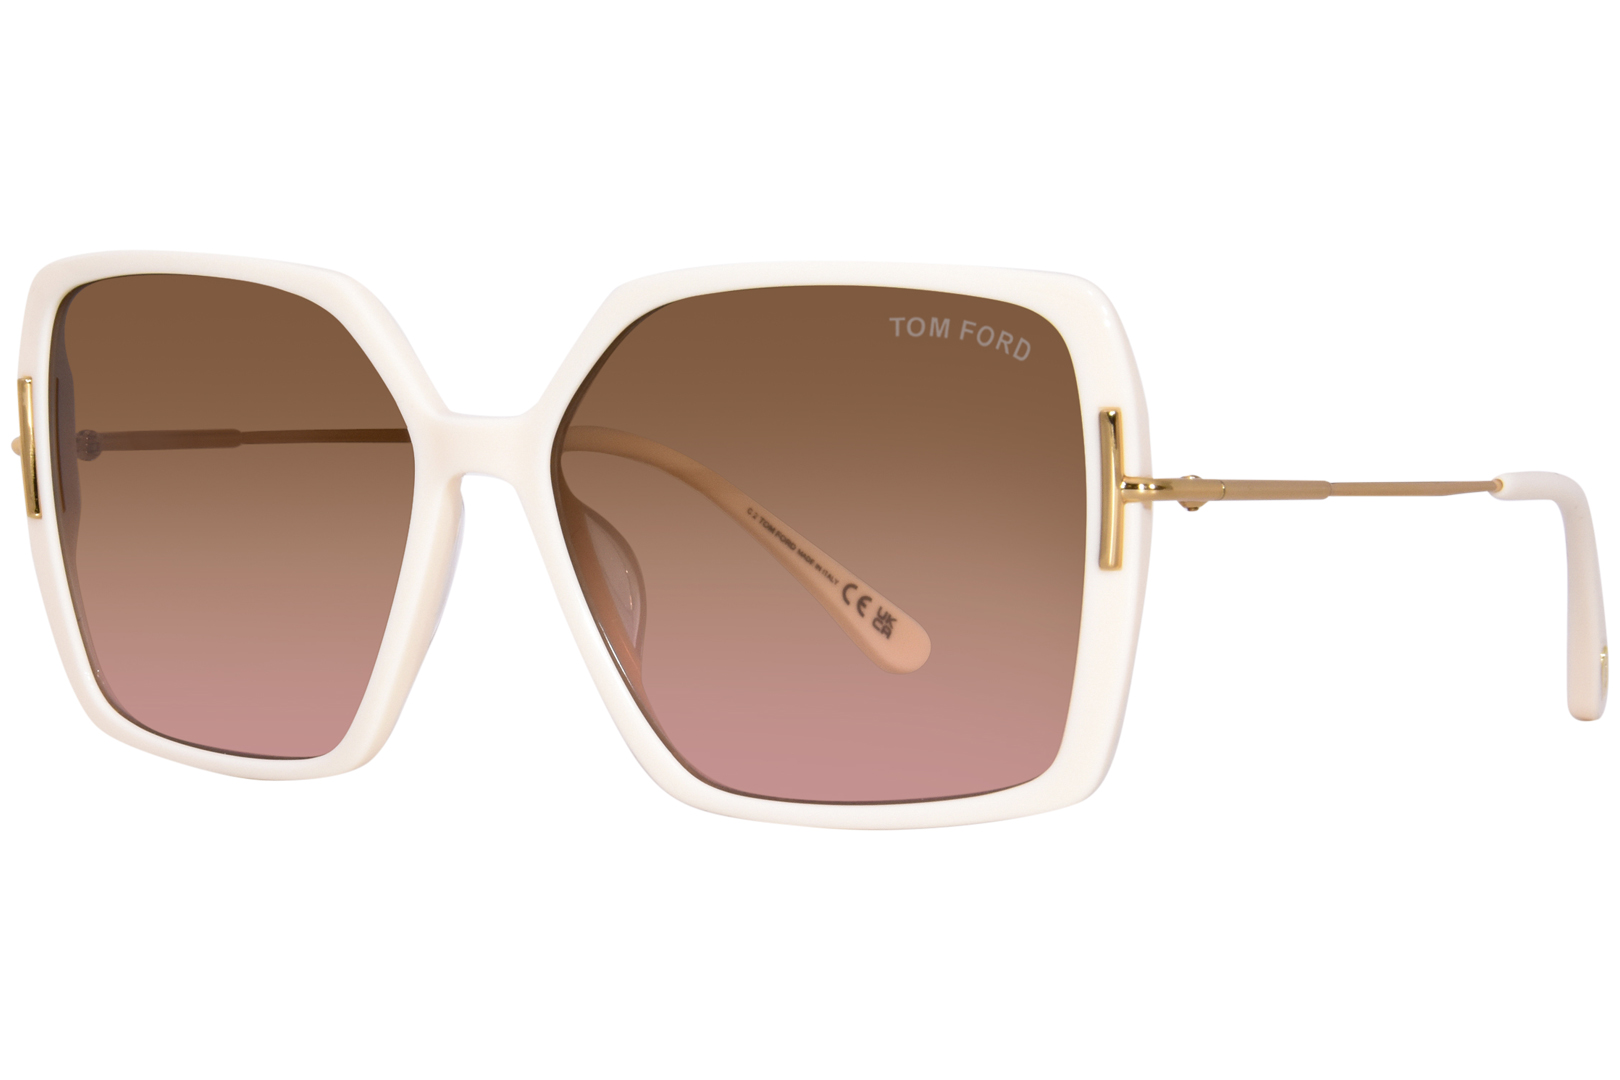 https://www.eyespecs.com/gallery-option/554277924/1/tom-ford-joanna-tf1039-sunglasses-womens-square-shape-shiny-ivory-gold-logo-amber-gradient-25f-1.jpg